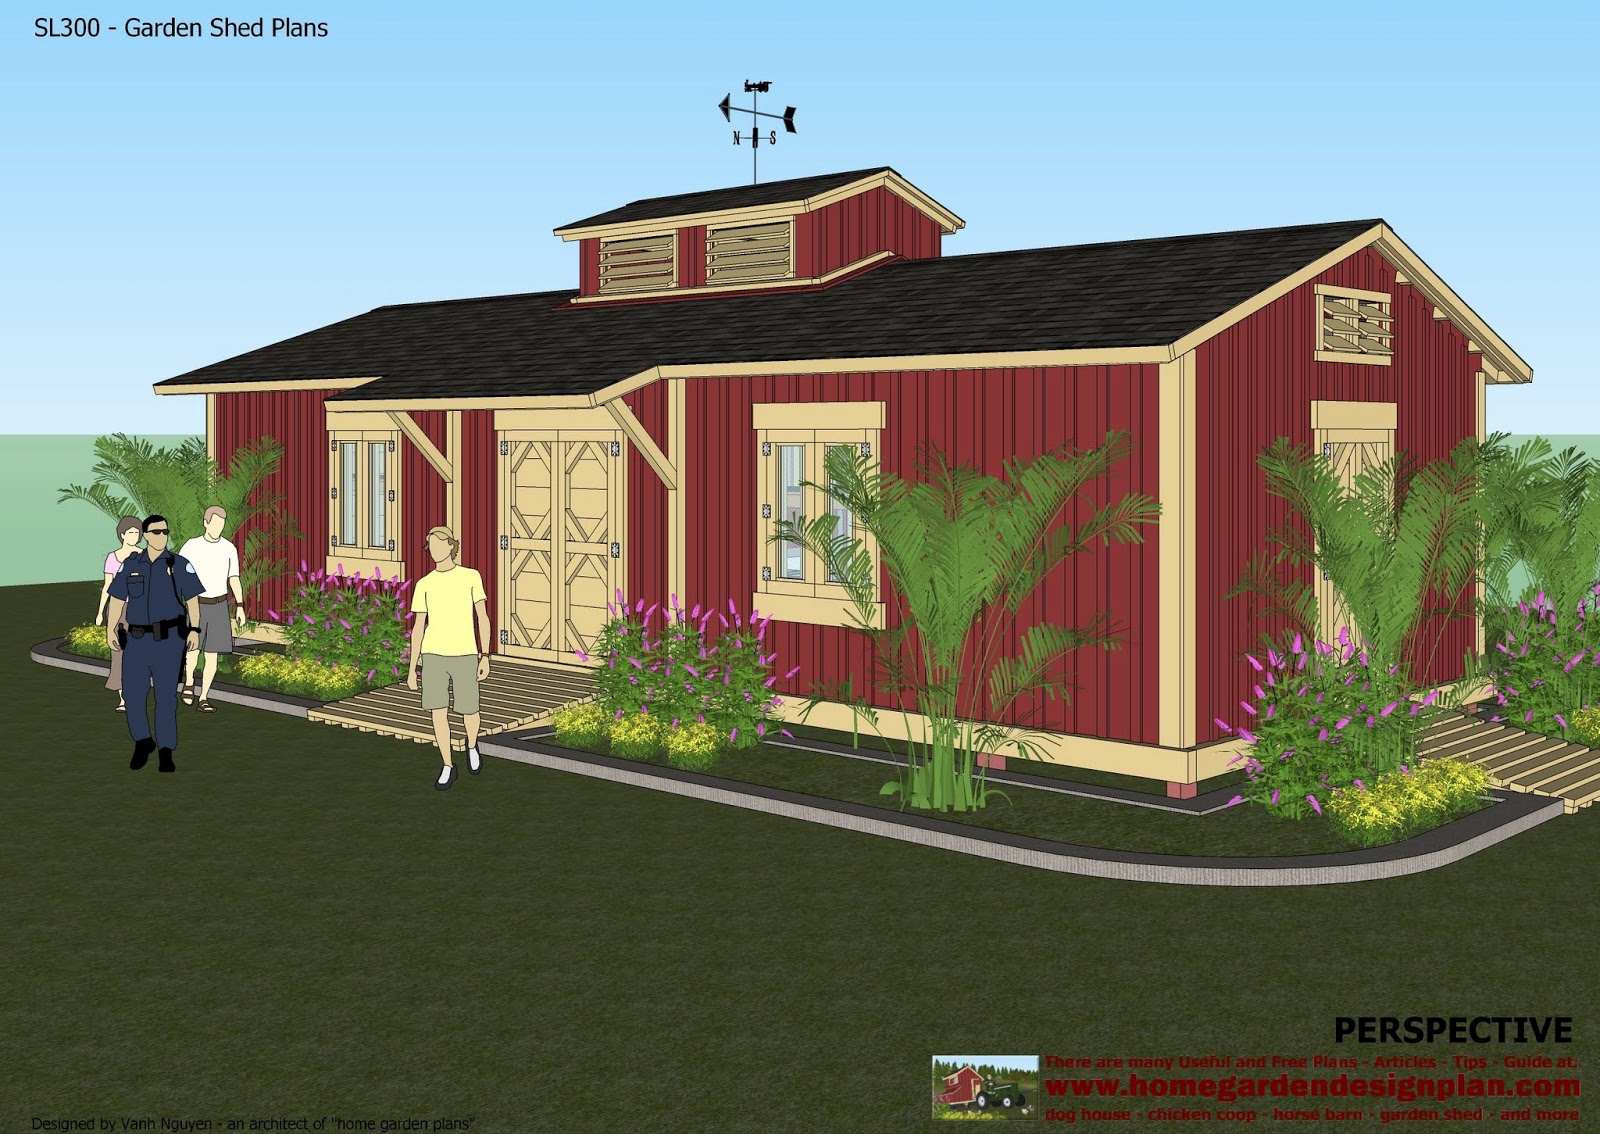 ... +shed+plans+-+storage+shed+plans+-+garden+shed+plans+construction.jpg